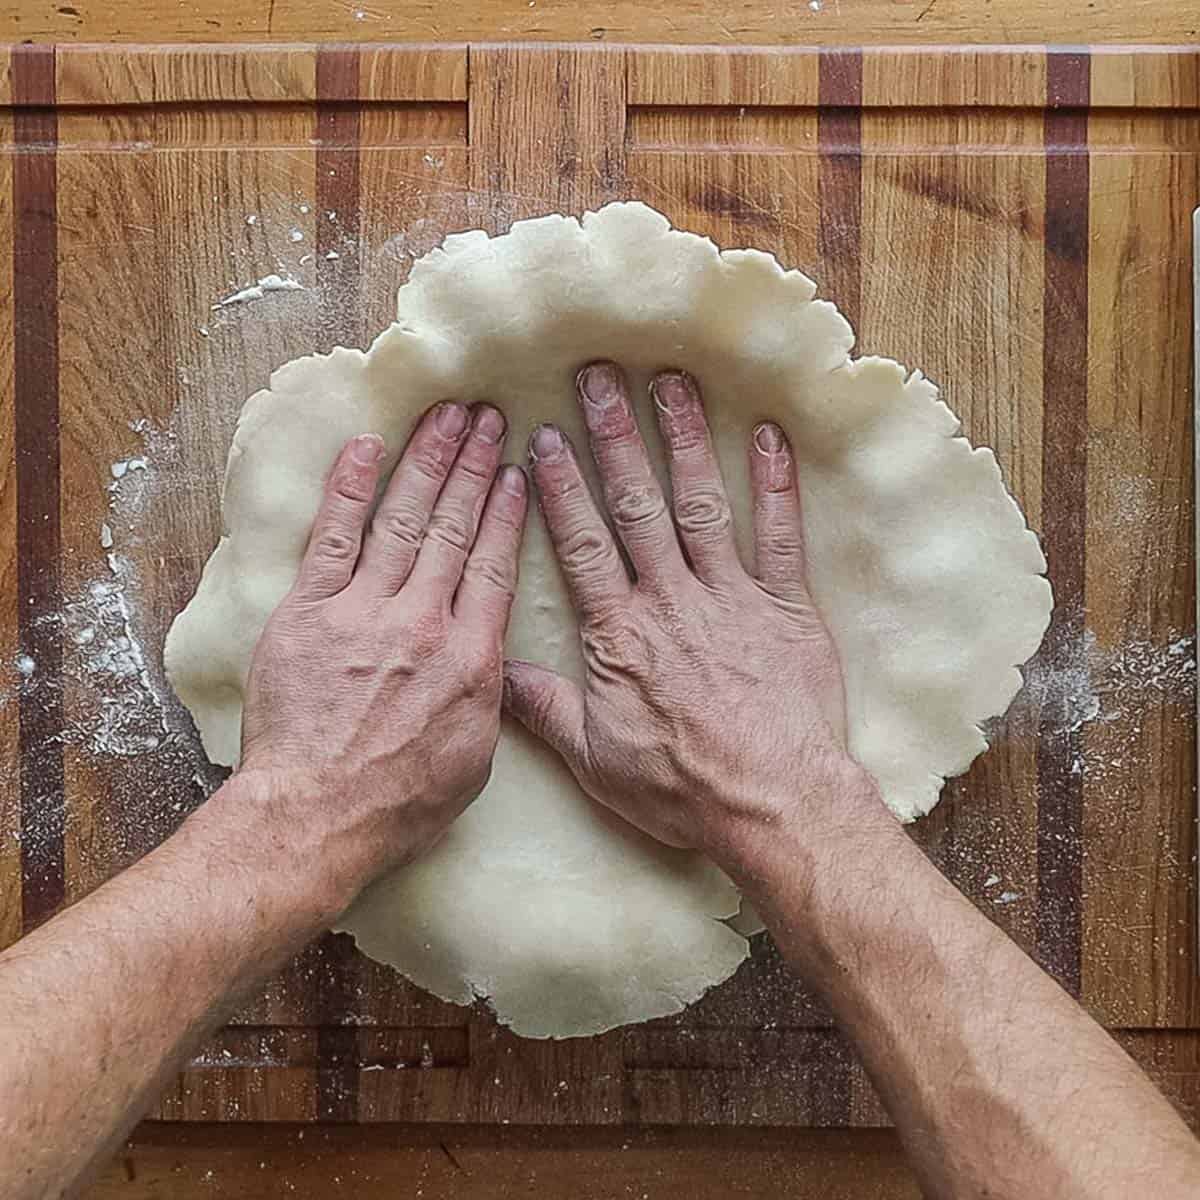 Placing a pie crust in a pie pan. 